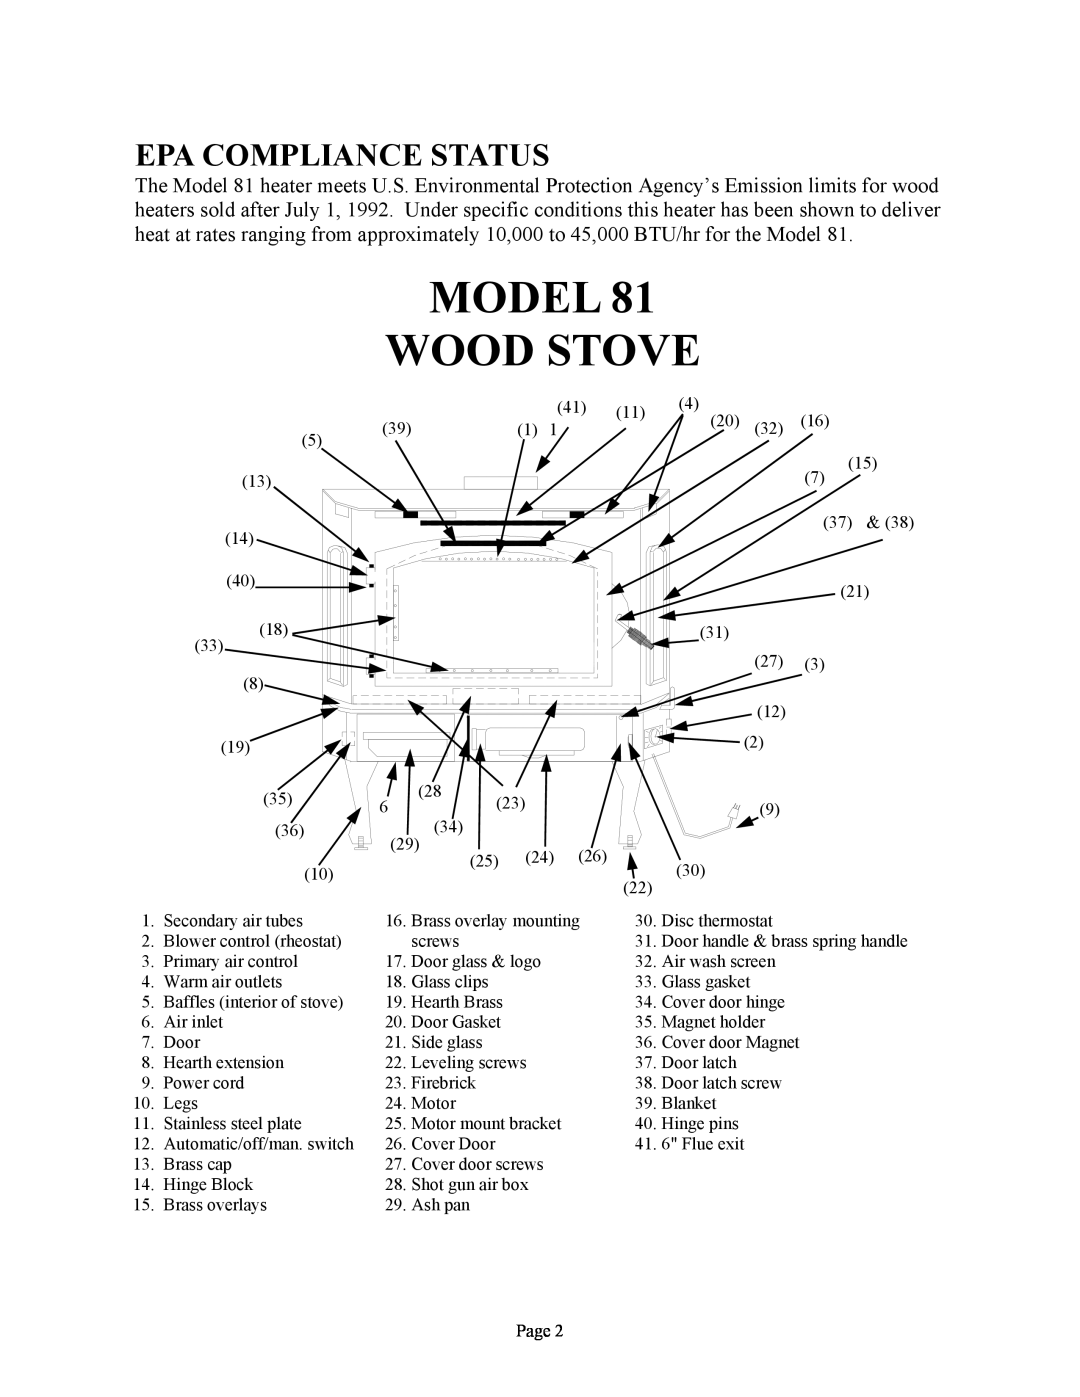 New Buck Corporation 81 installation instructions Epa Compliance Status, Model Wood Stove 